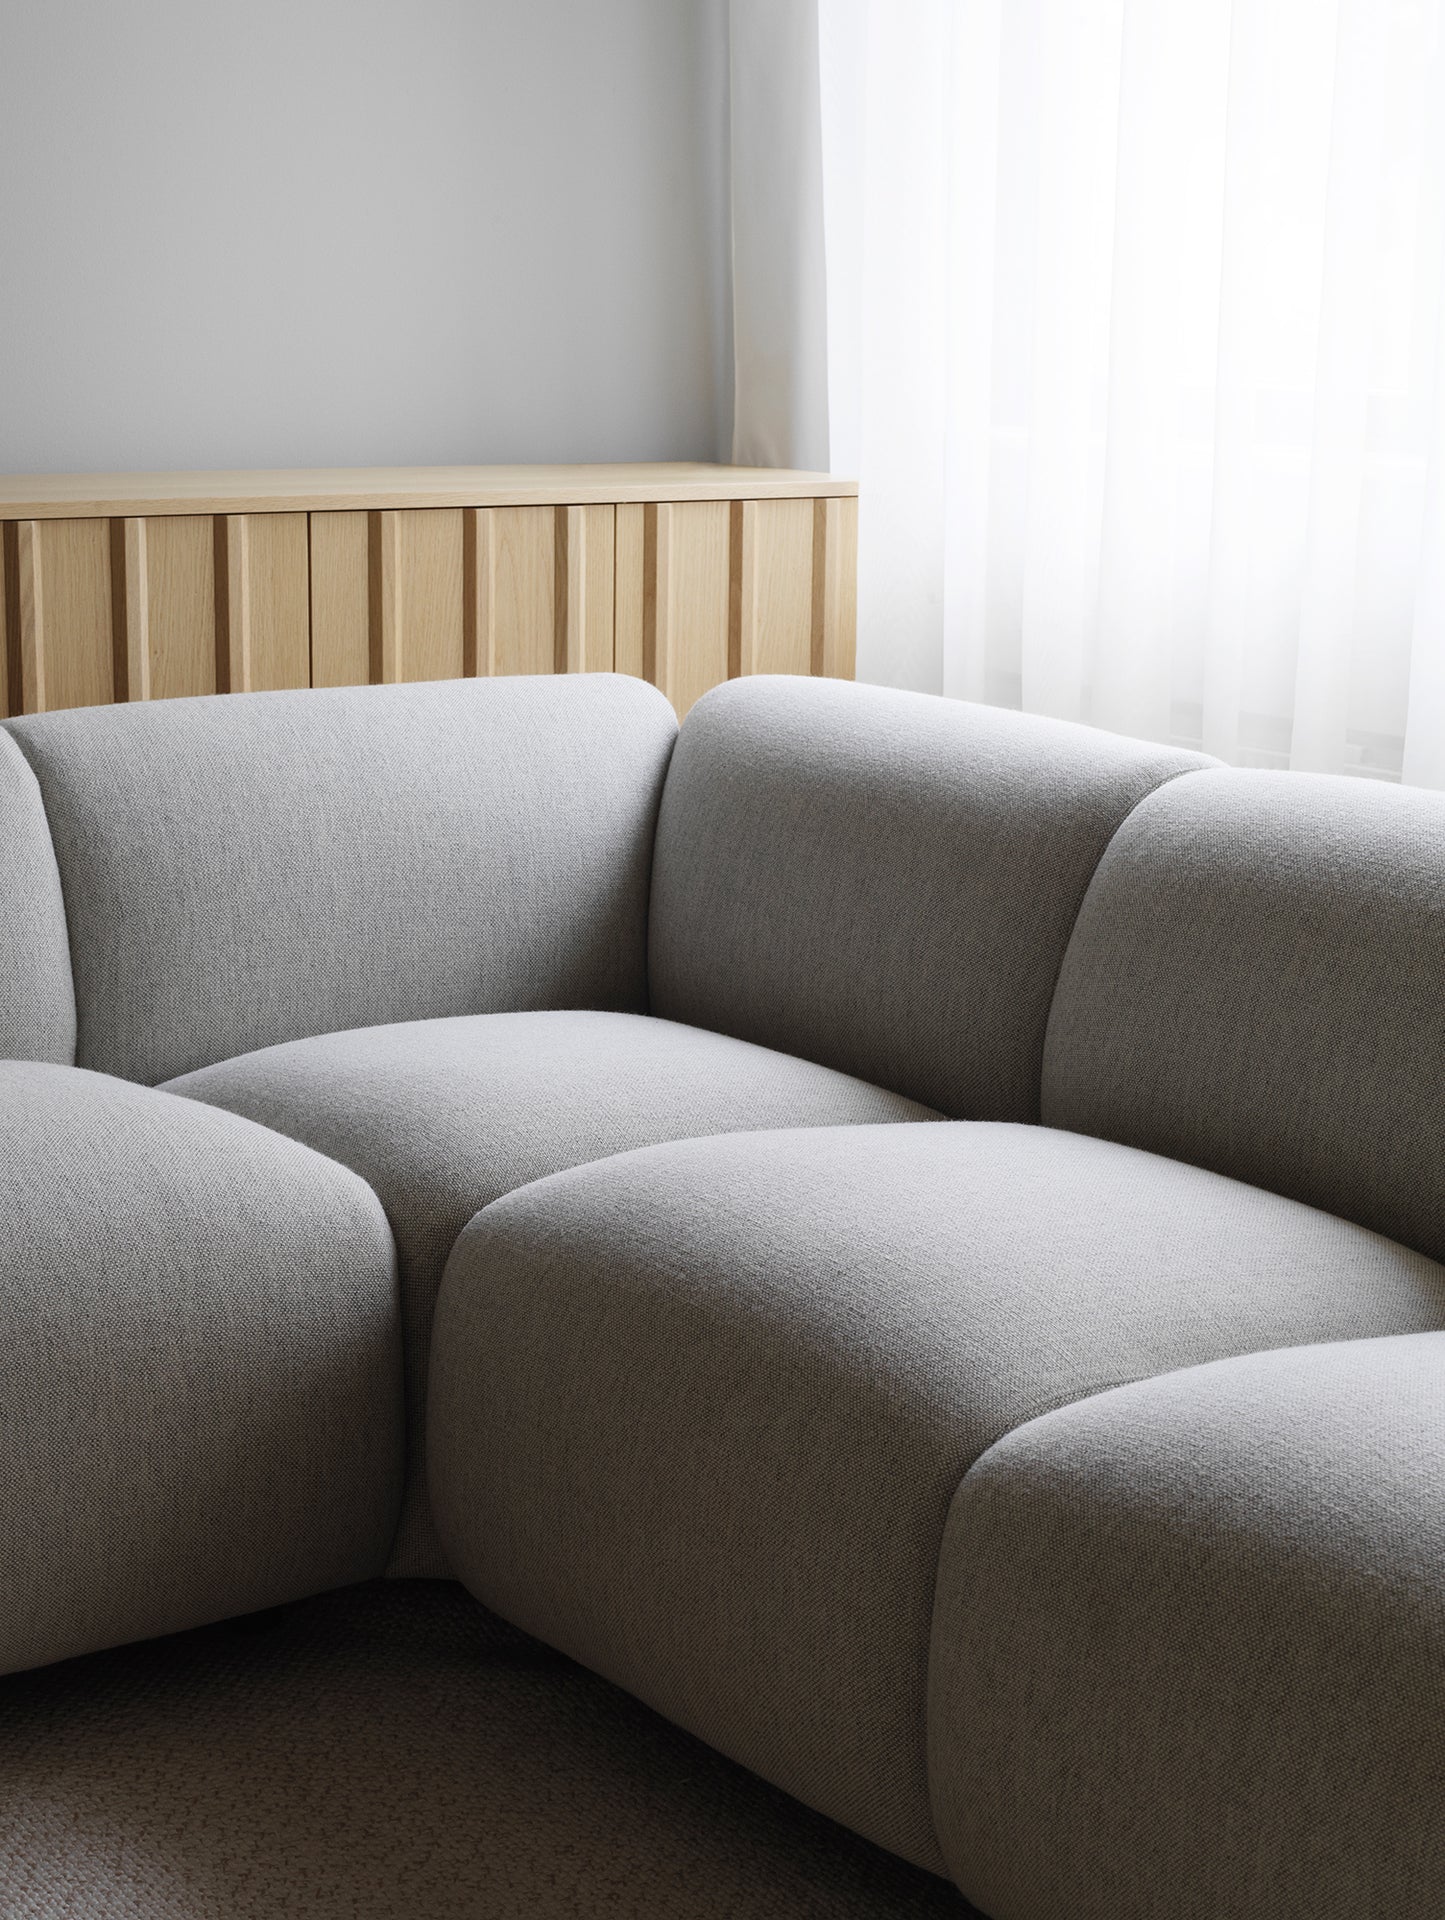 Swell Modular Sofa by Normann Copenhagen / Hallingdal 65 110